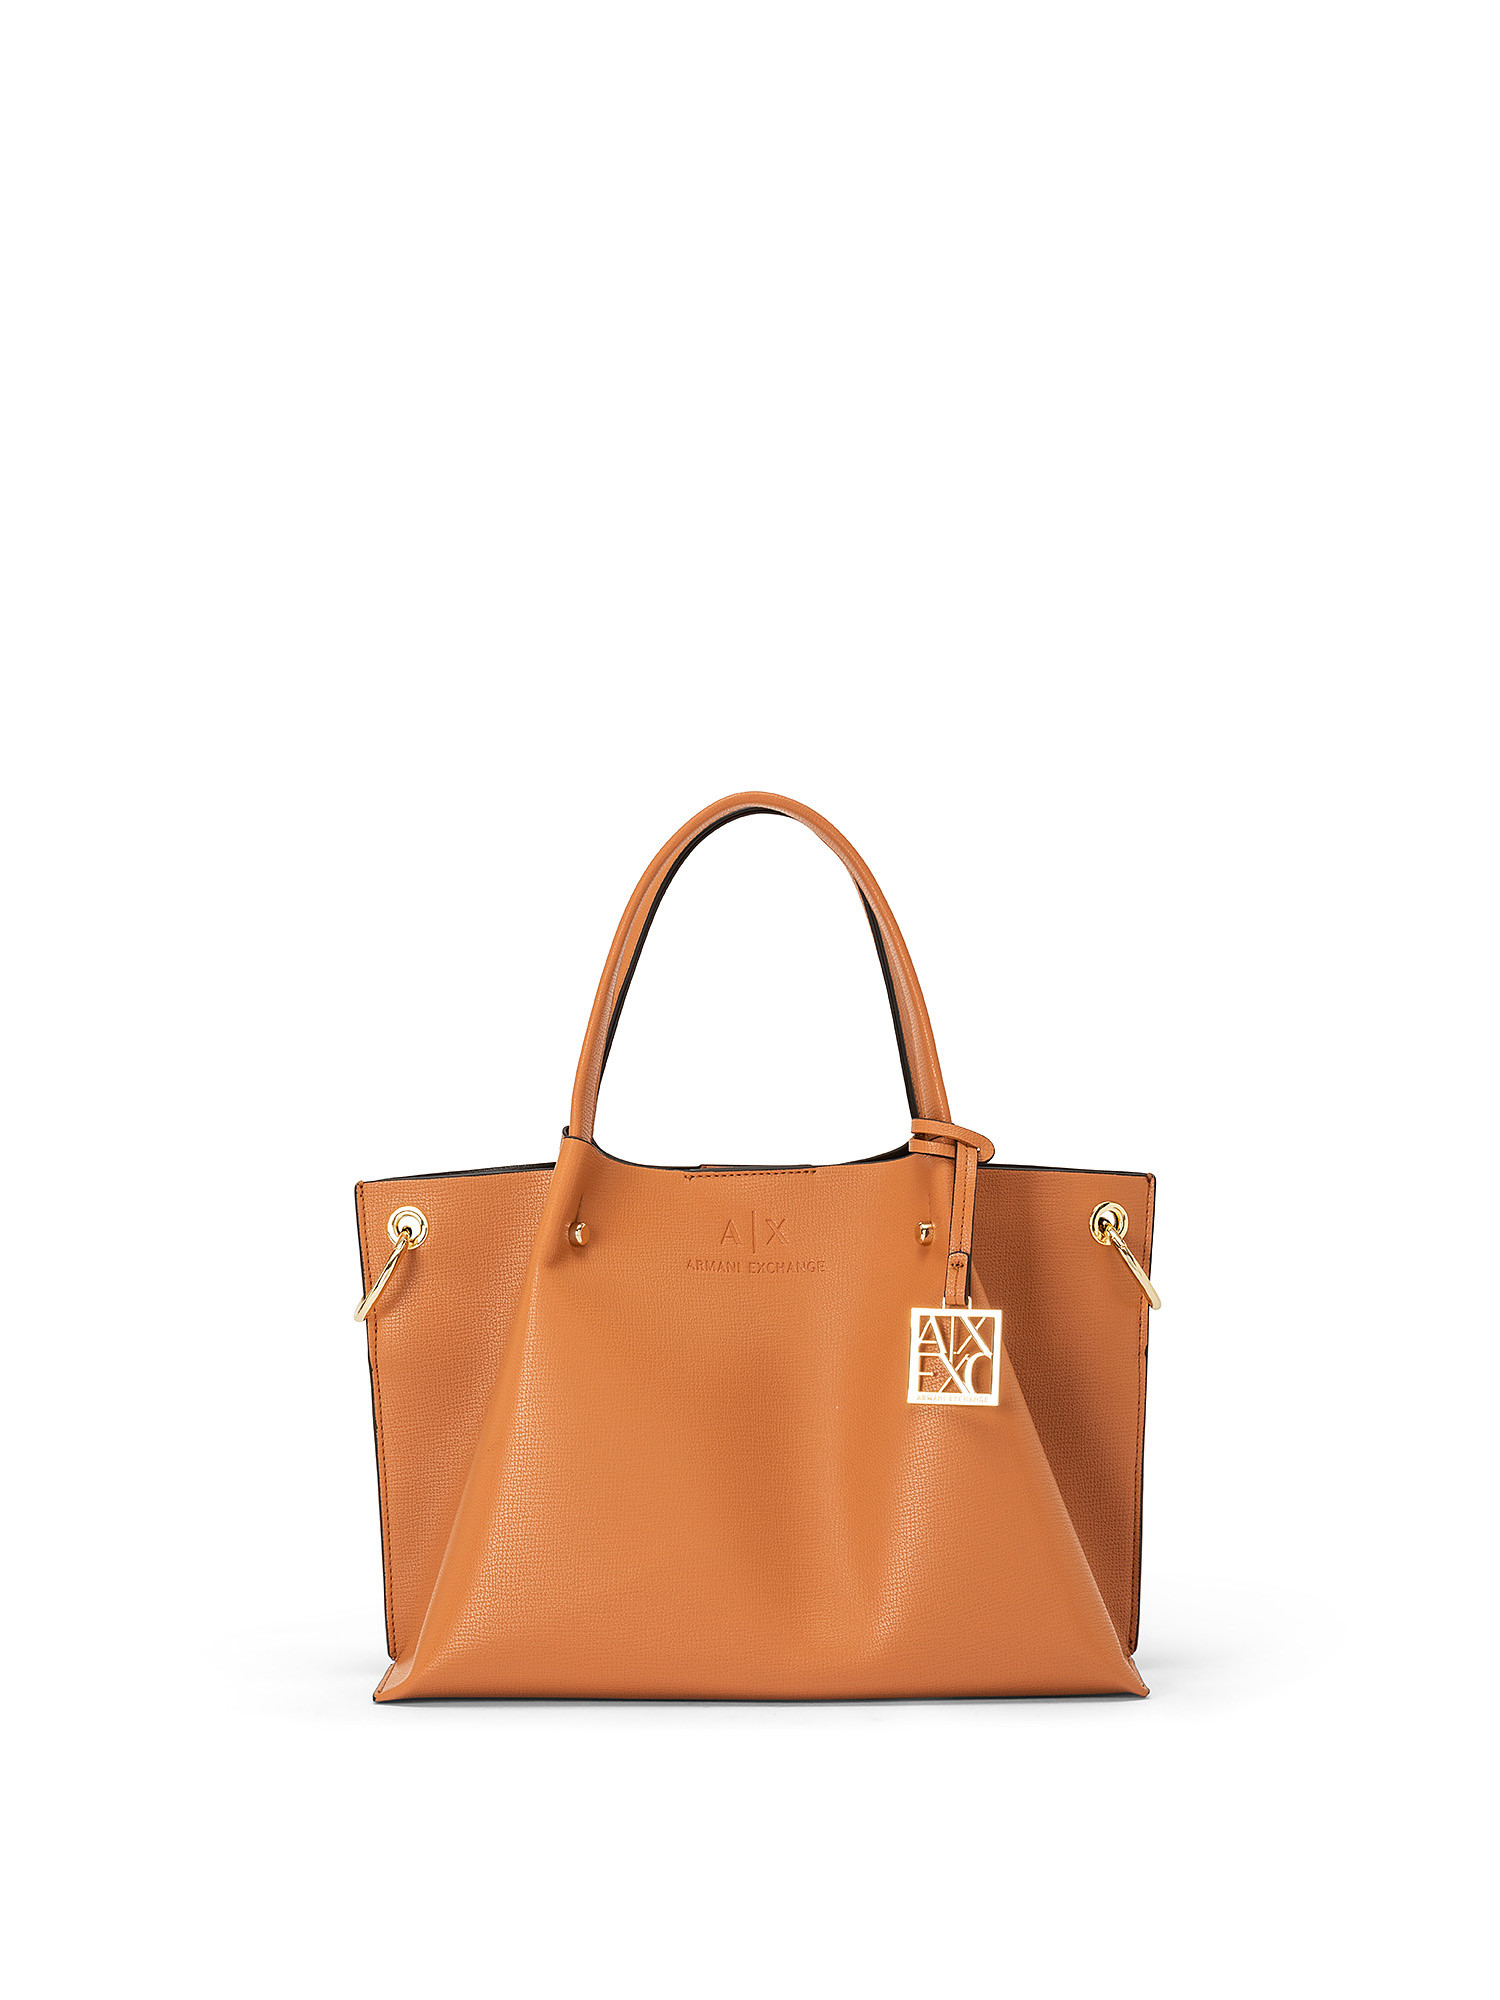 Shopping bag con cerniera superiore, Rosa, large image number 0